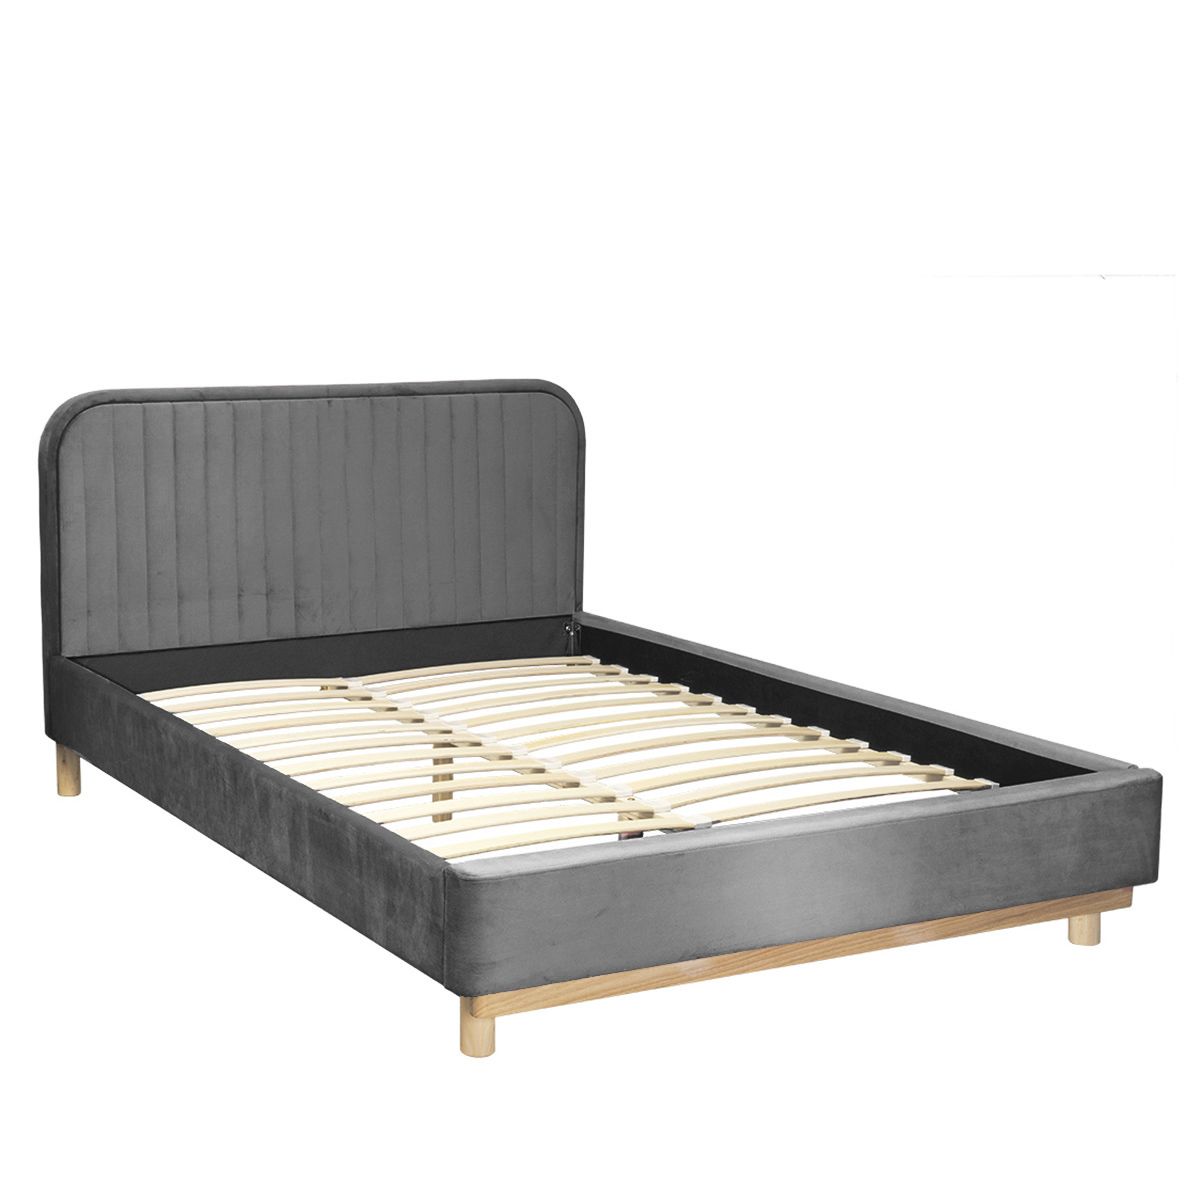 Samta gulta ar rāmi KARALIUS pelēka 140x200 cm - N1 Home